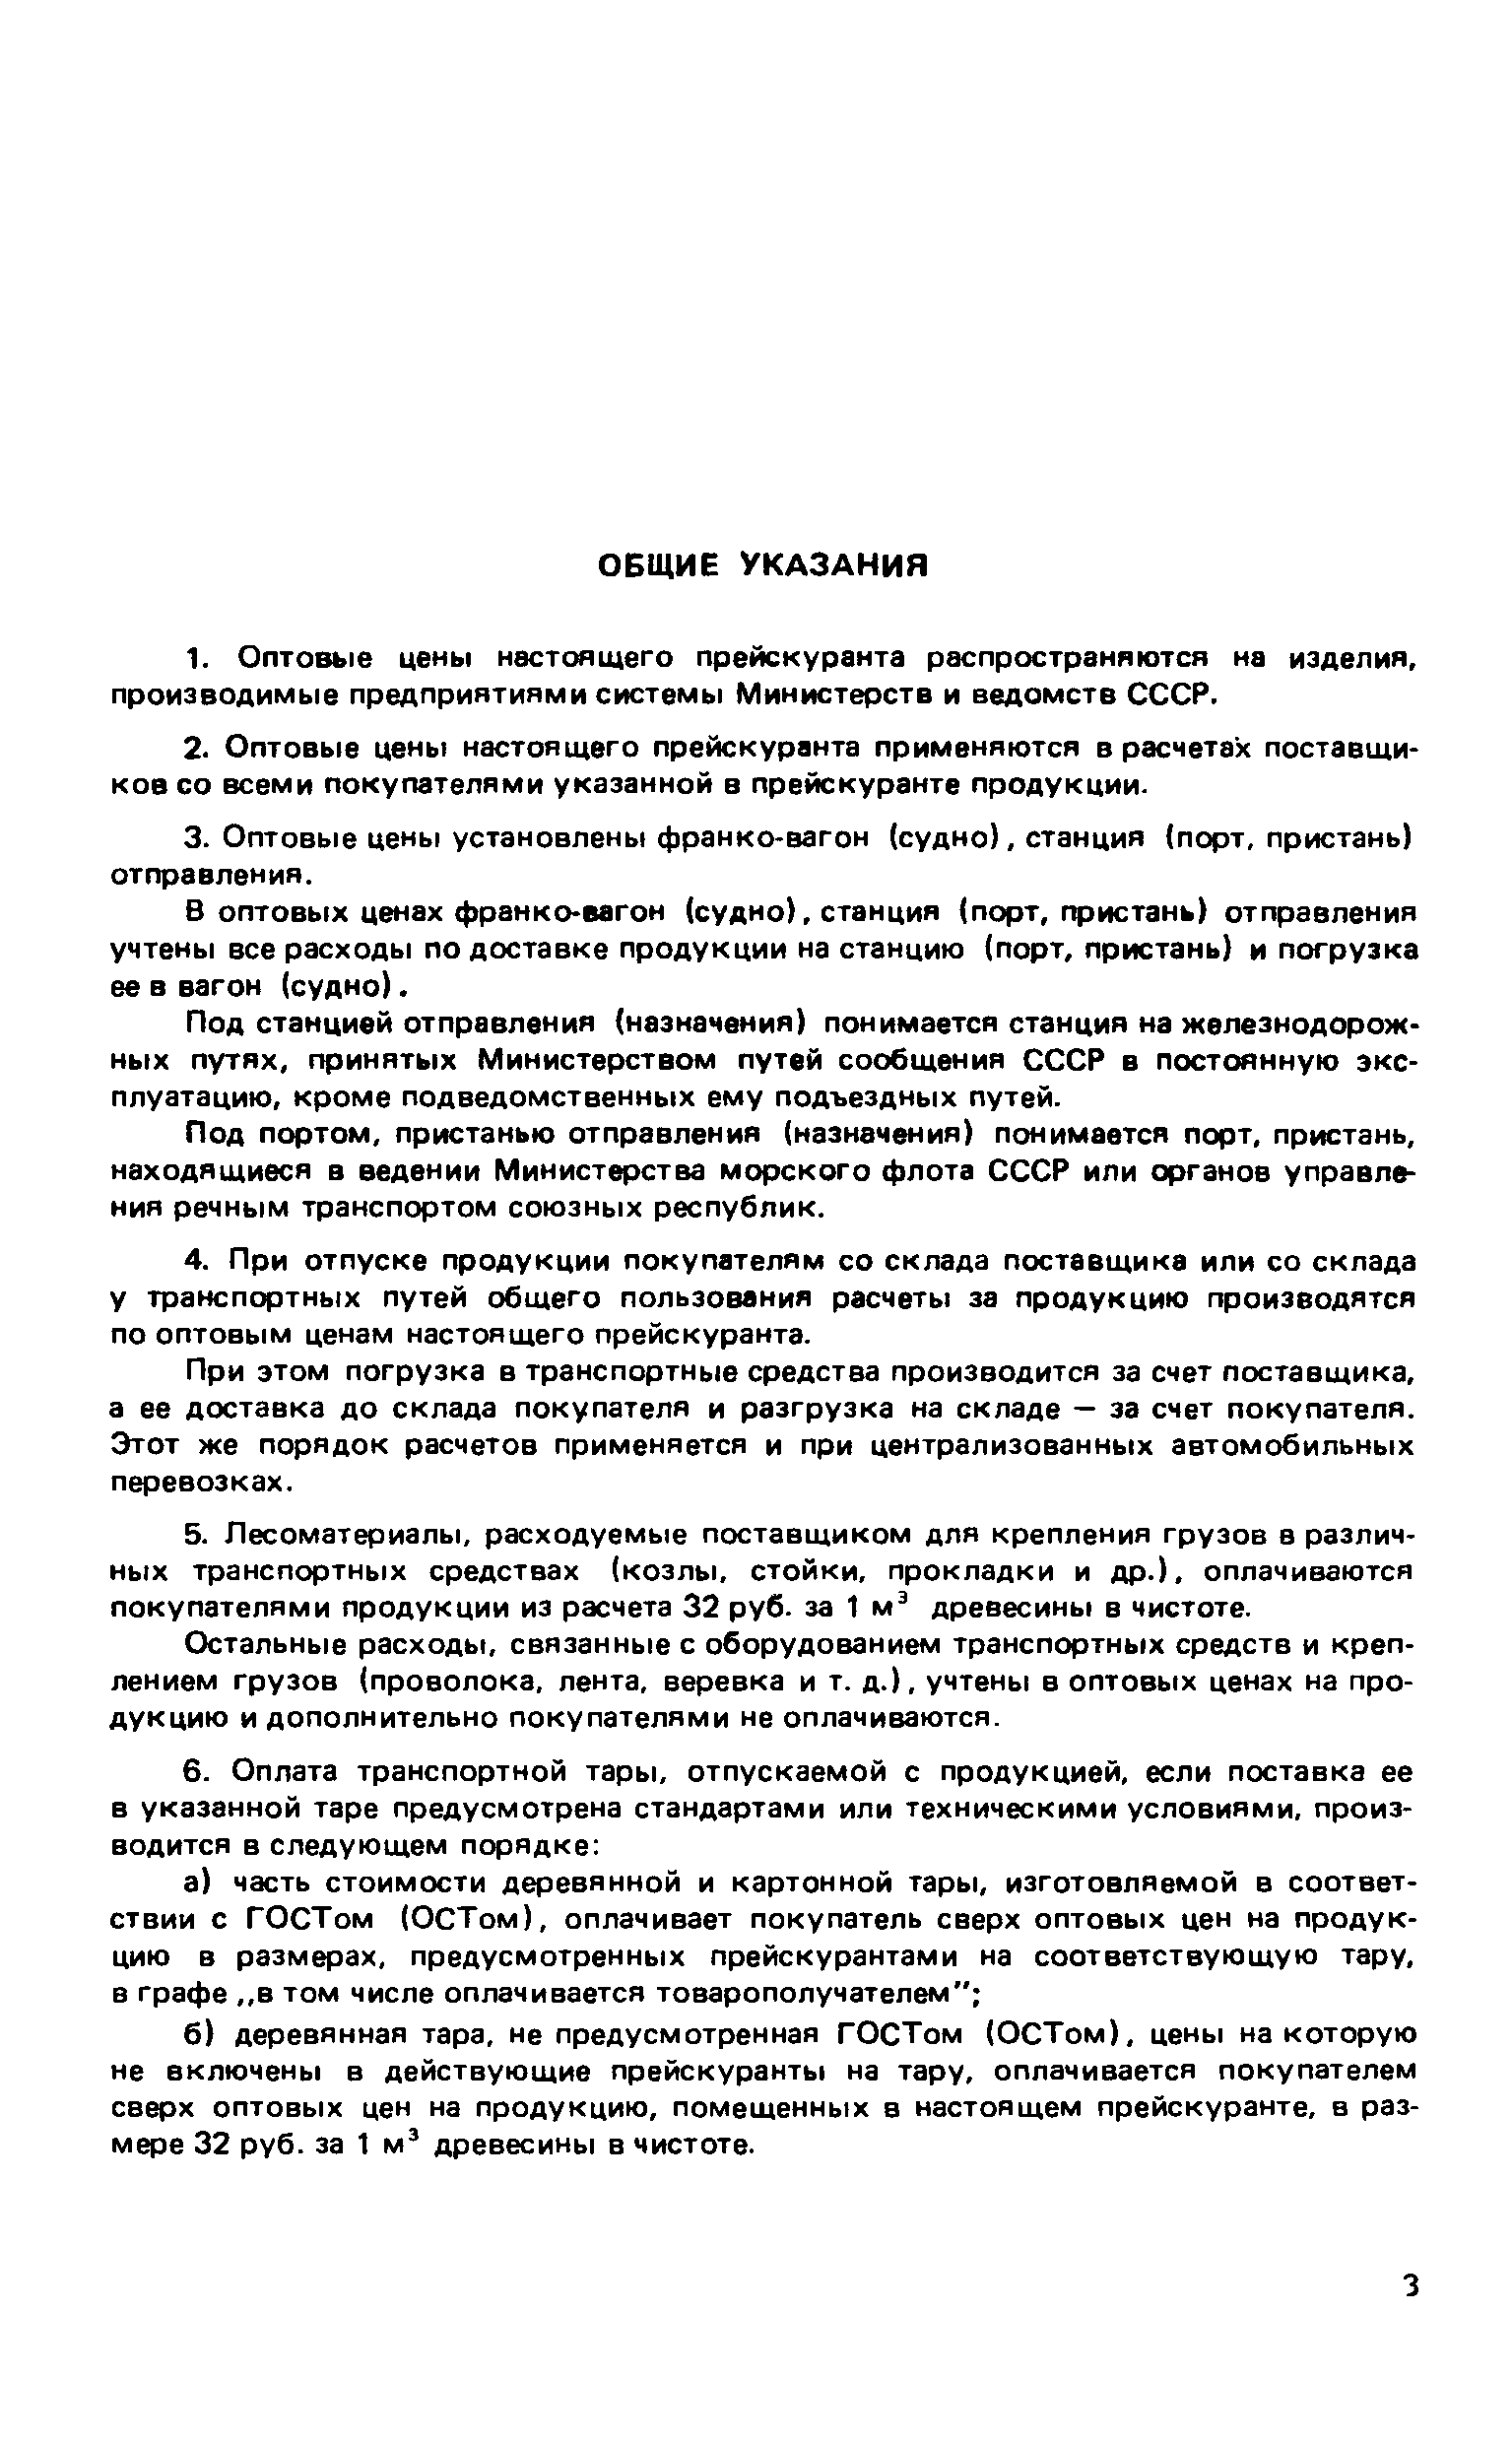 Прейскурант 27-01-49